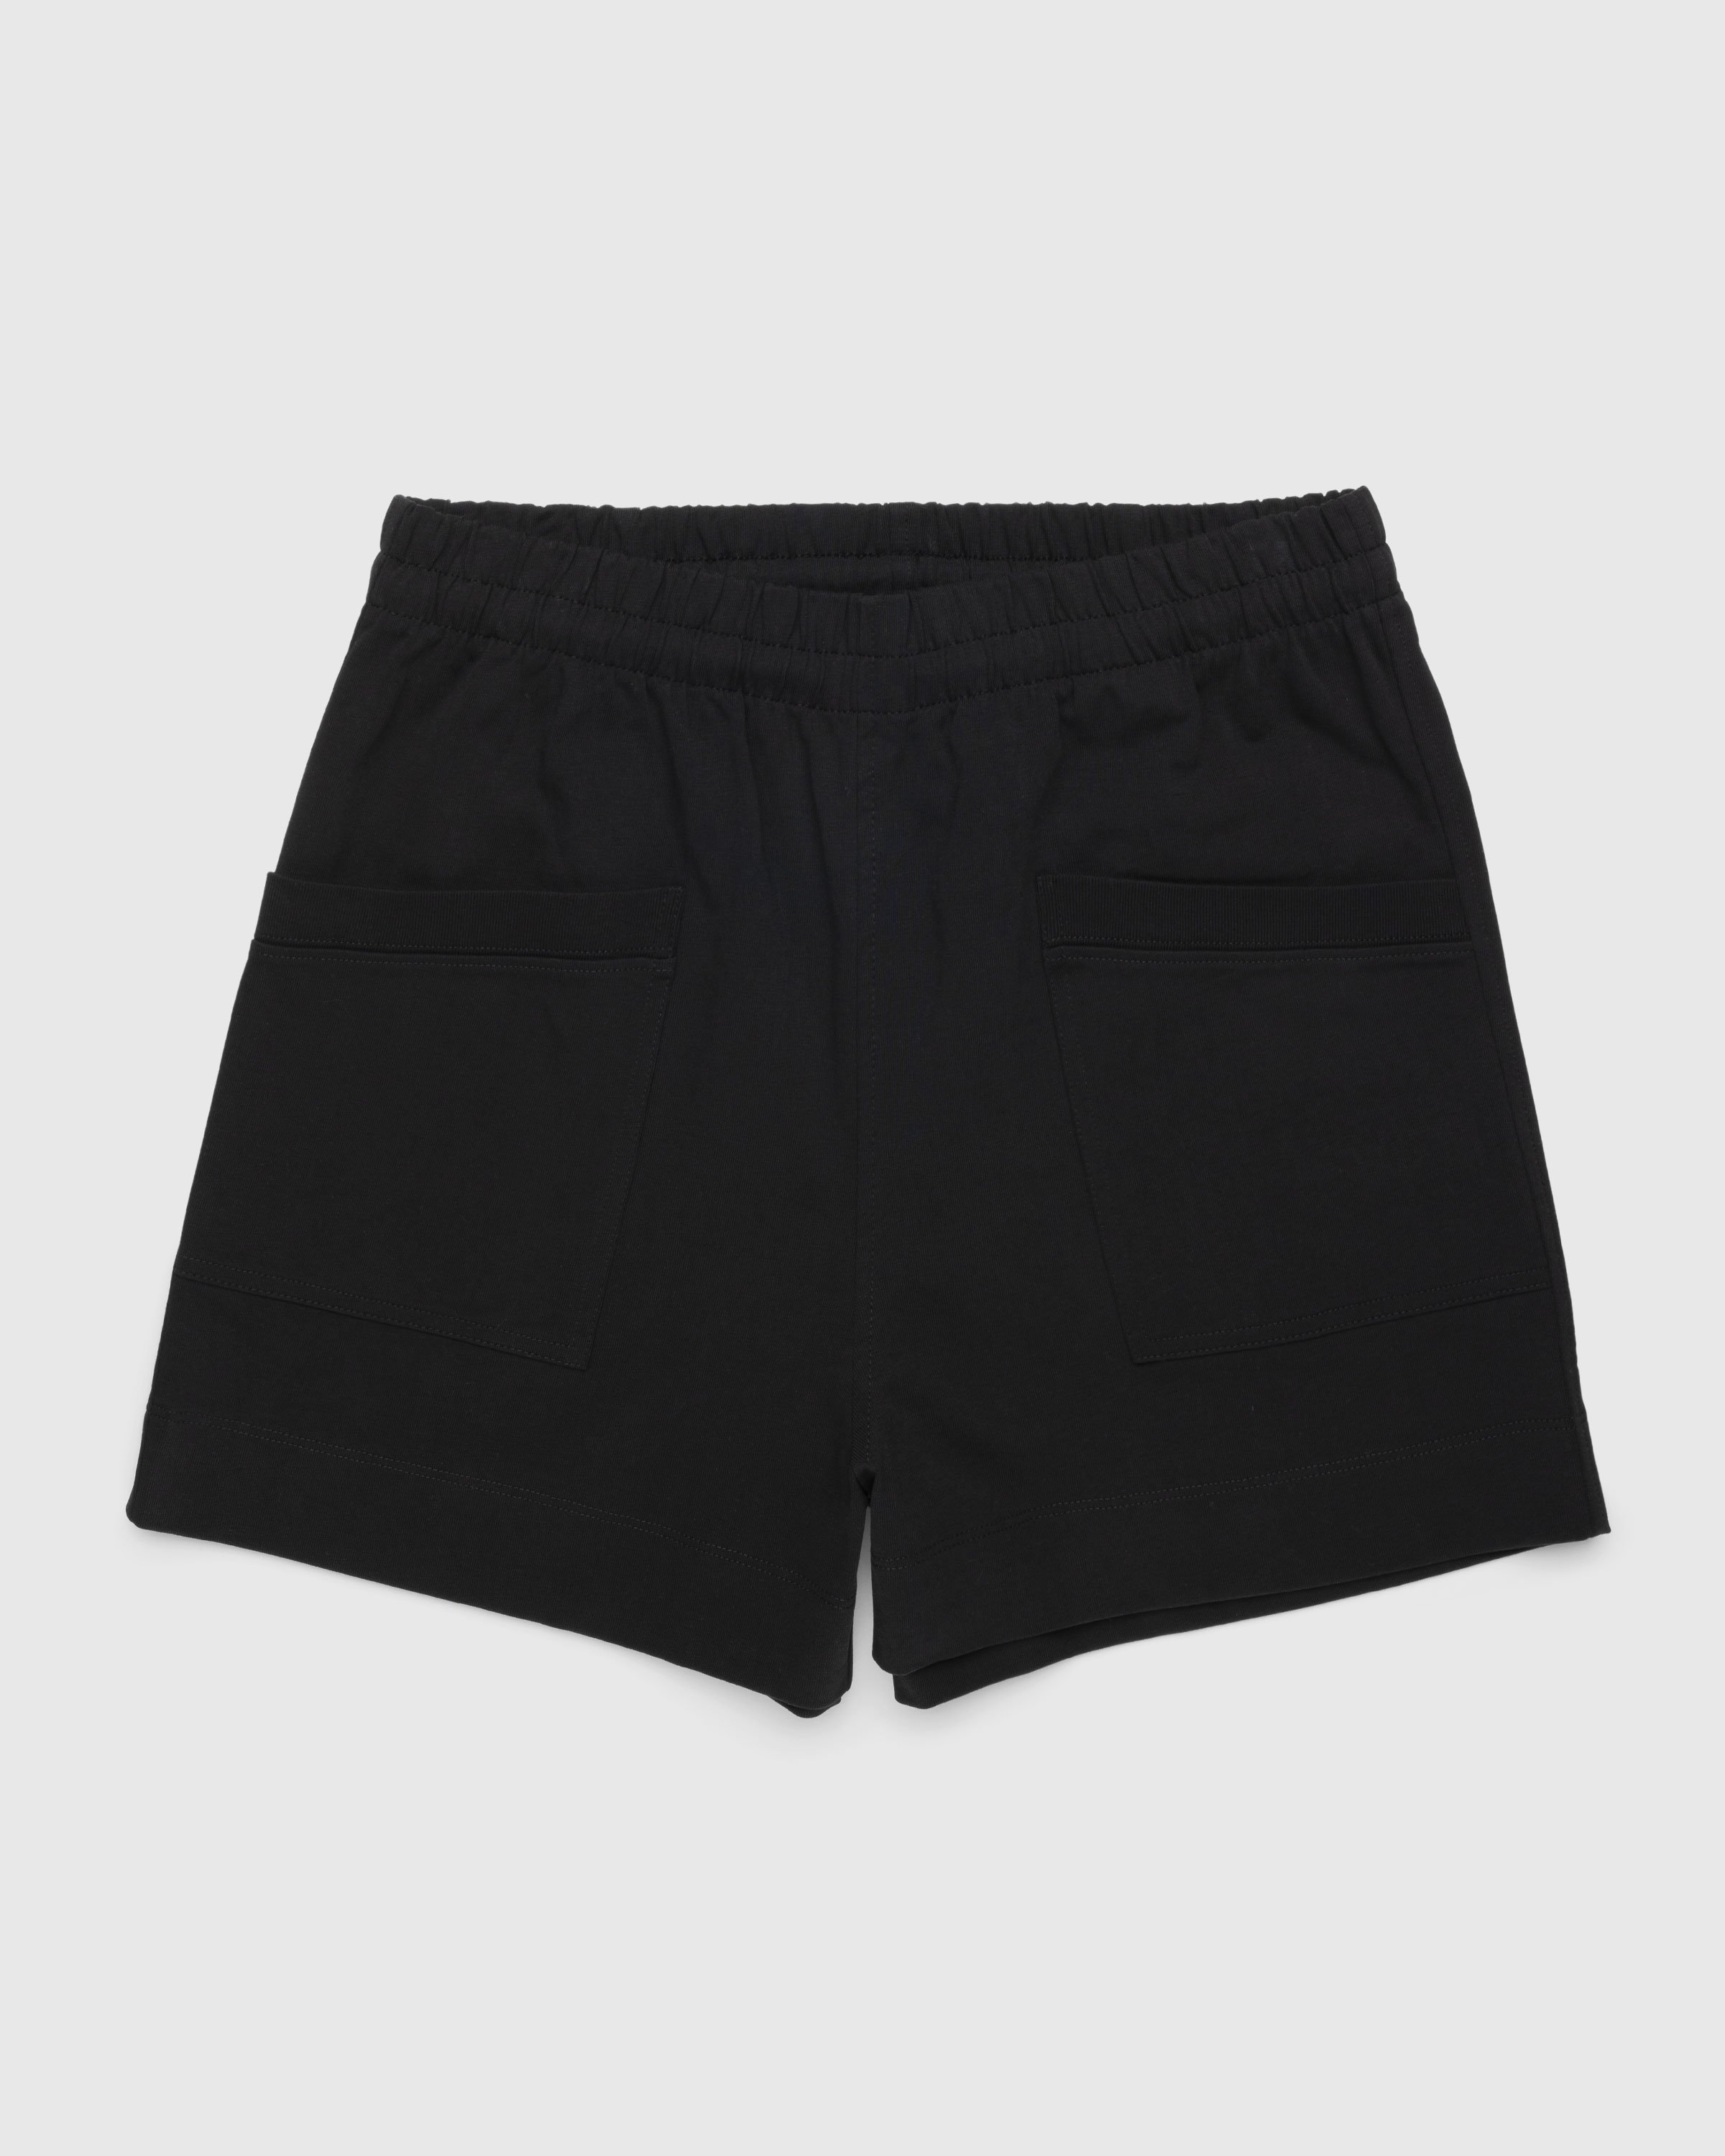 Dries van Noten - Henard Shorts Black - Clothing - Black - Image 1